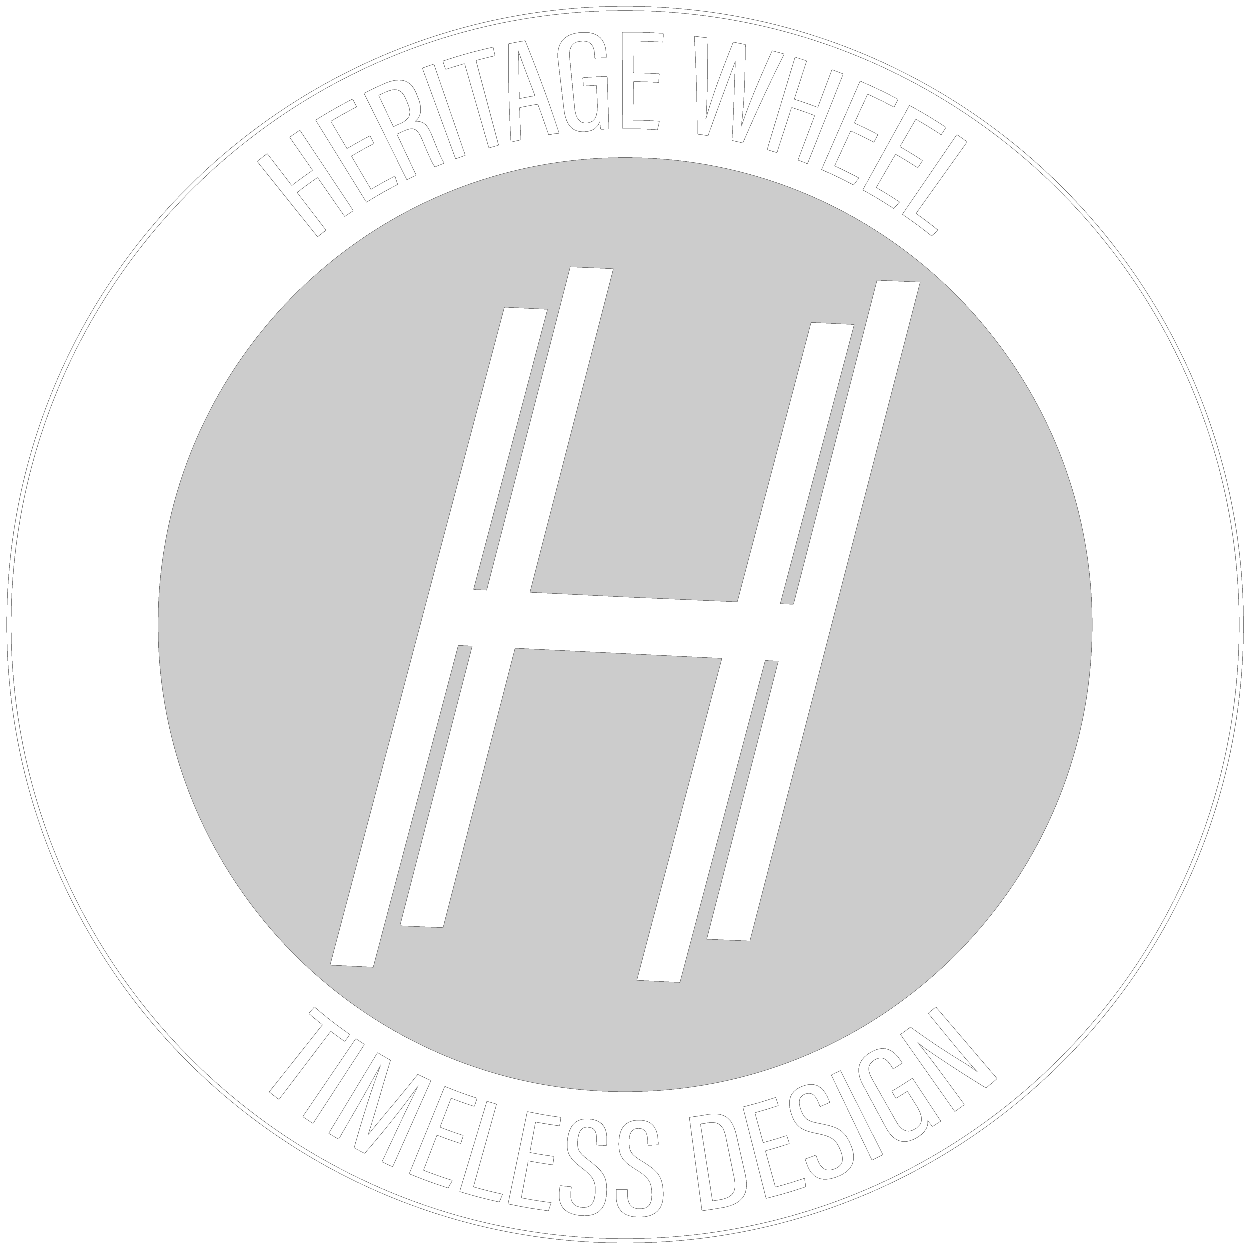 White Wheel Logo - HERITAGE WHEEL